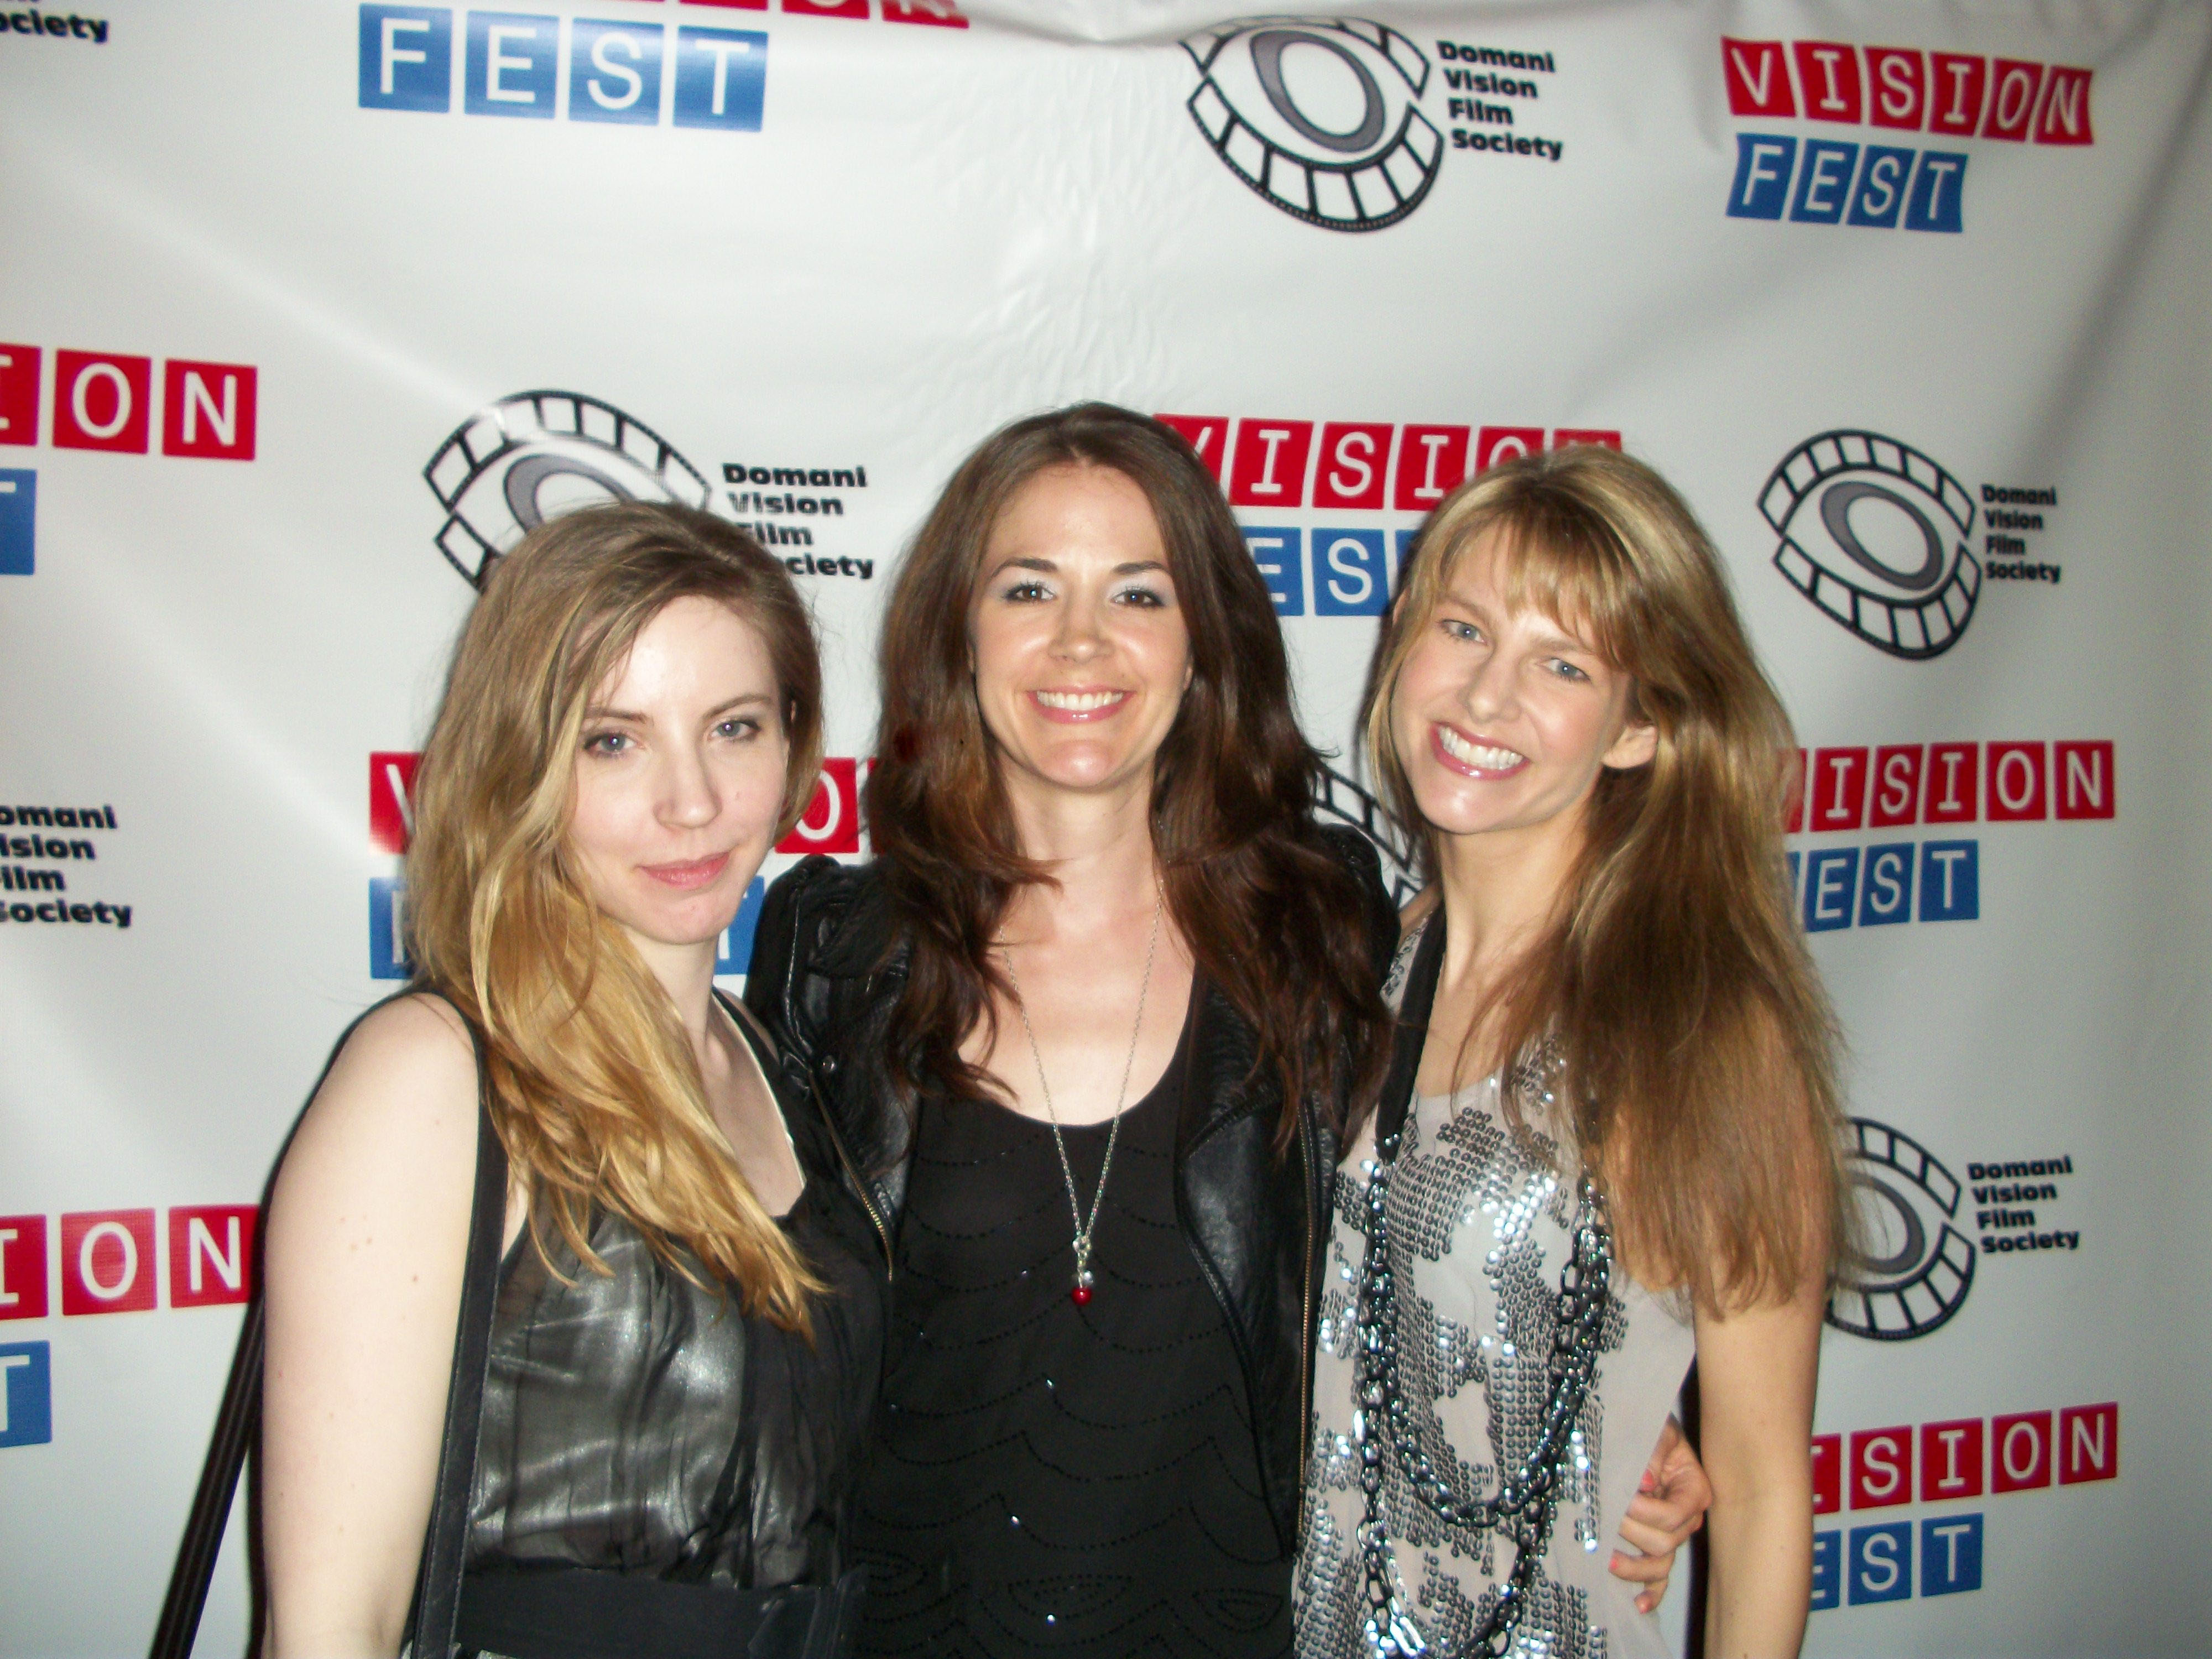 Lisa Peart, Karen Brelsford, and Kelsey O'Brien at Visionfest Film Festival, Tribeca NY 2011